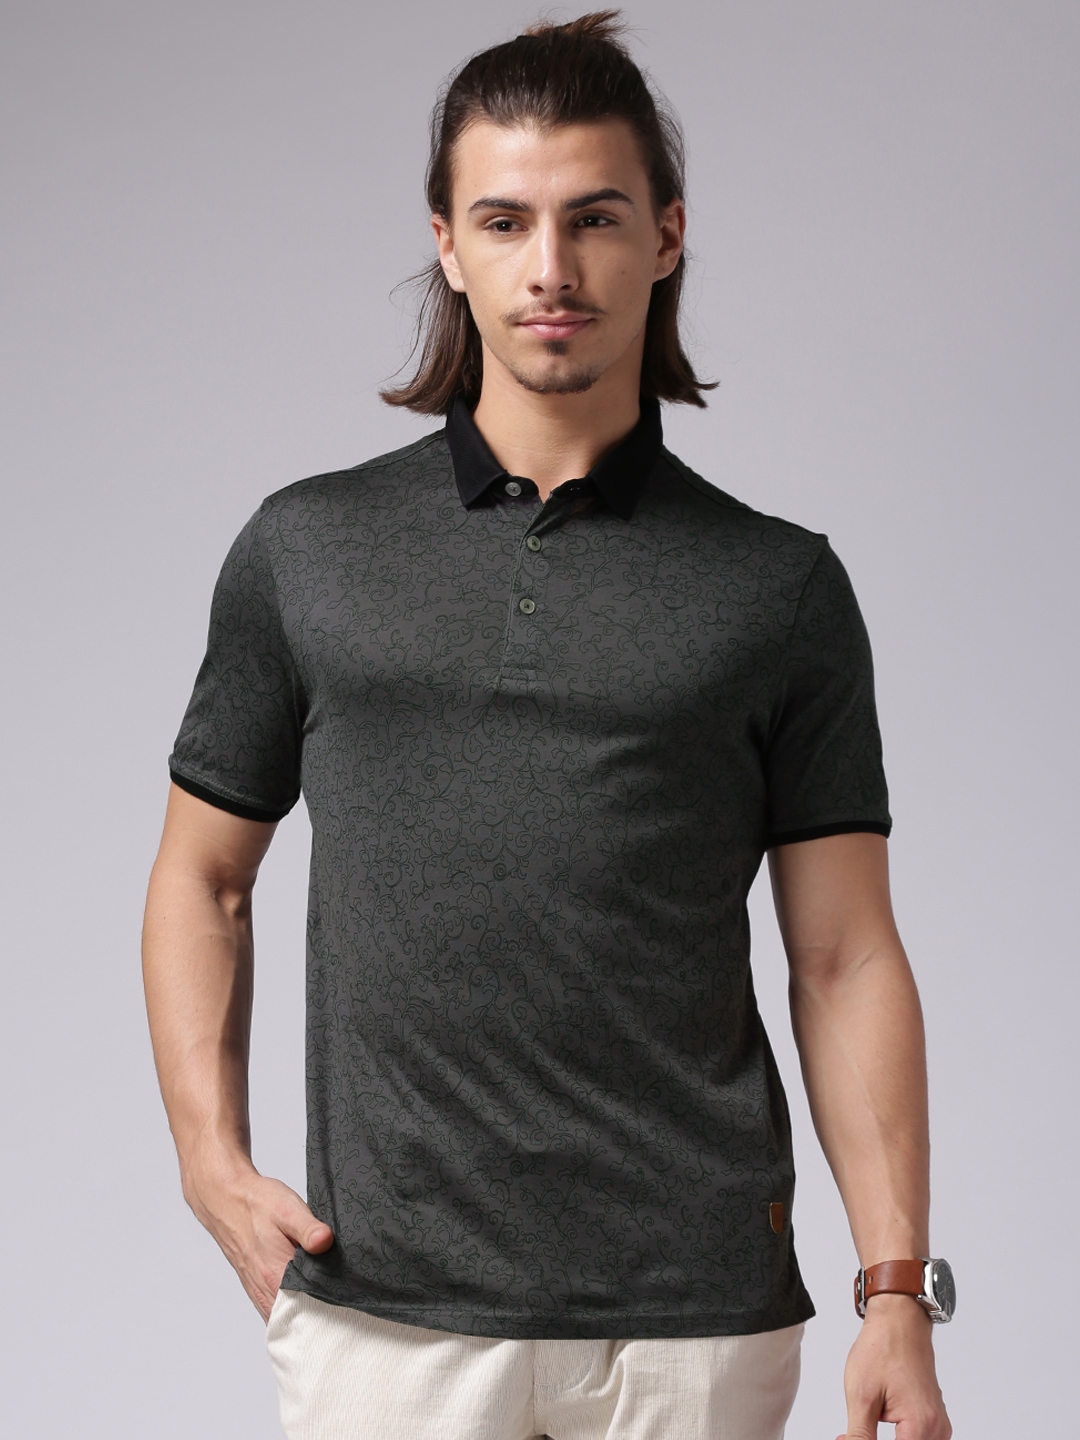 Haimont Men's Cotton Polo Shirts Soft Golf T-Shirts, 51% OFF